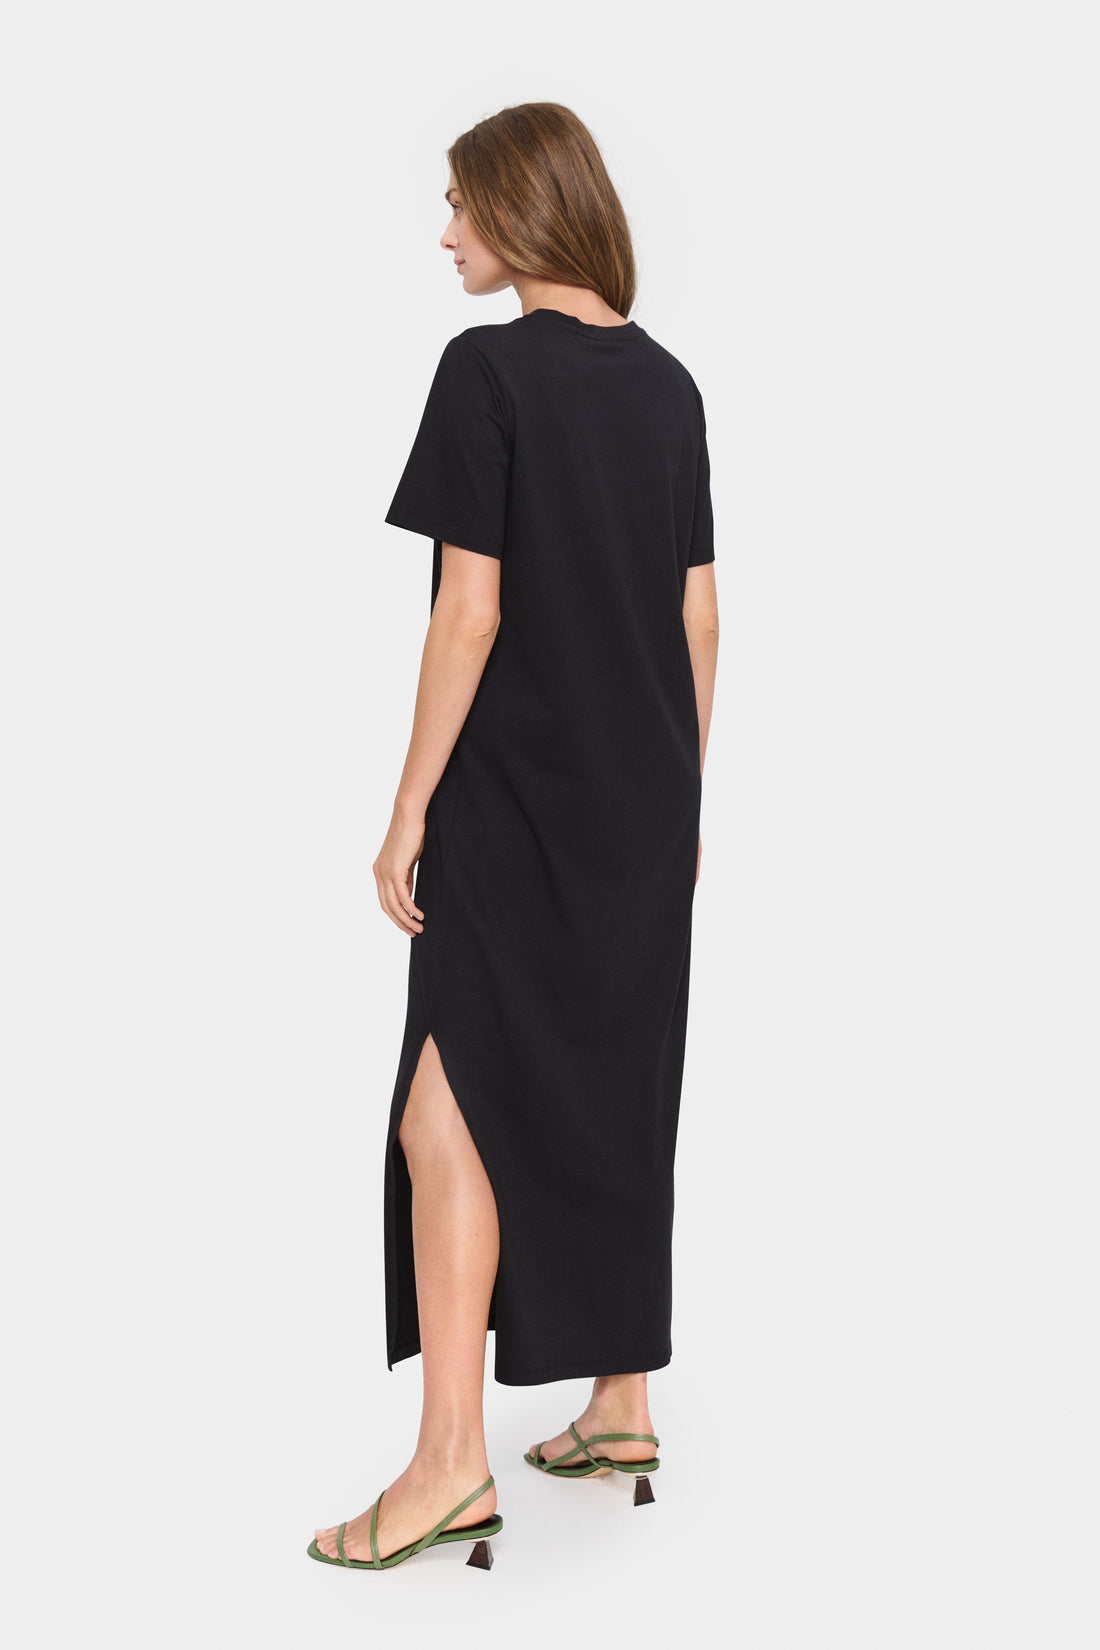 Saint Tropez Faria T-shirt Dress in Black